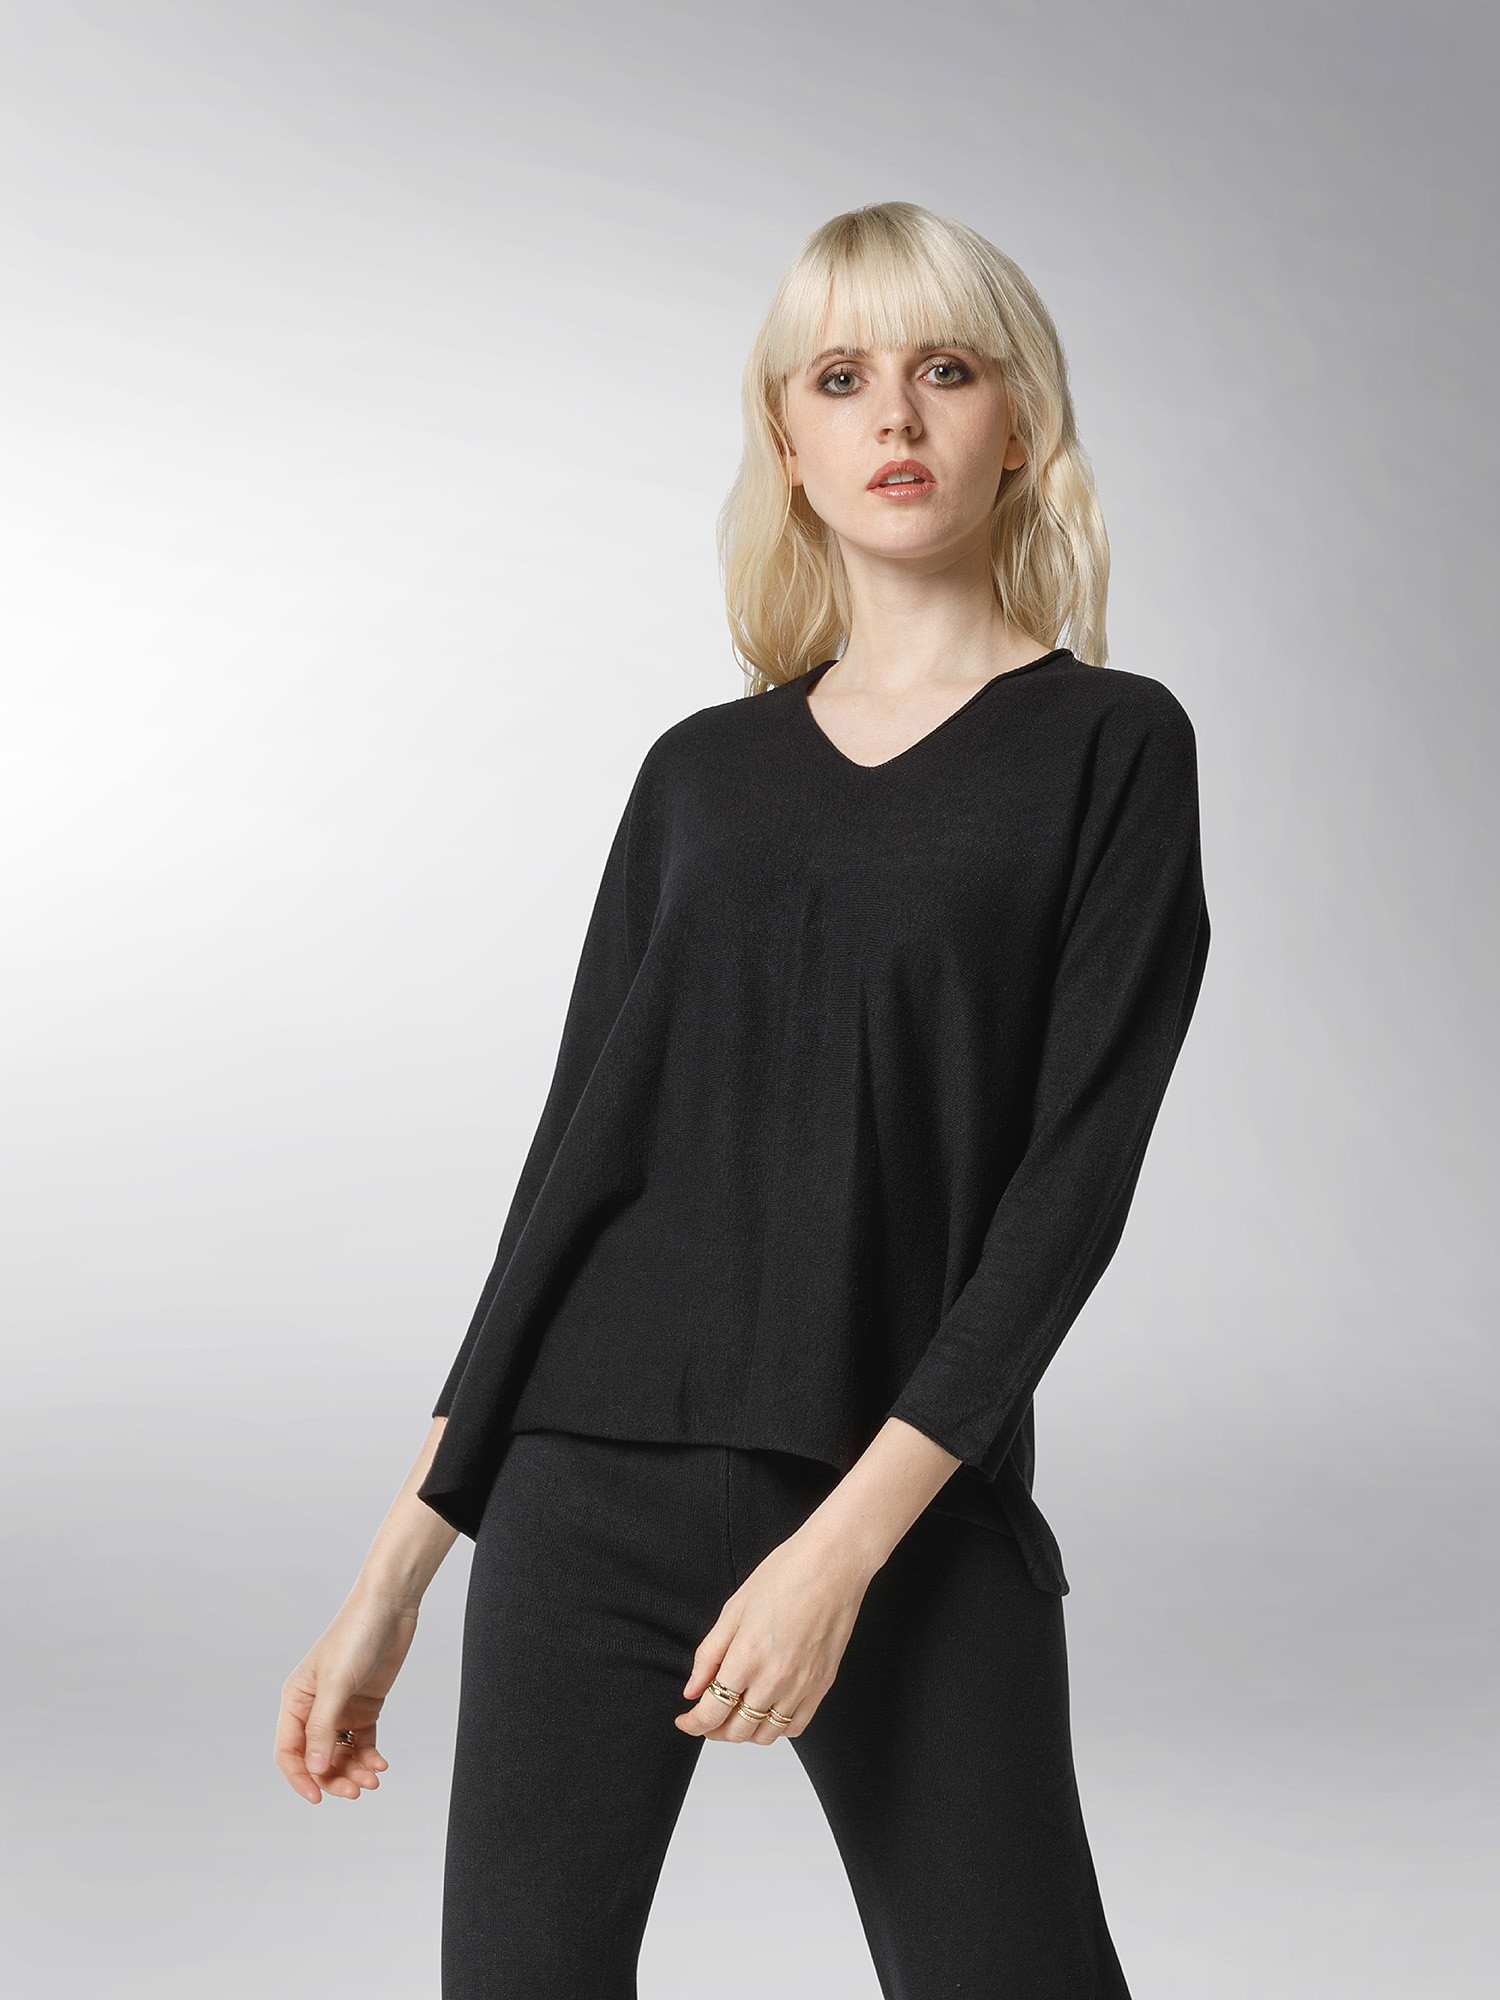 K Collection - Pullover, Black, large image number 3